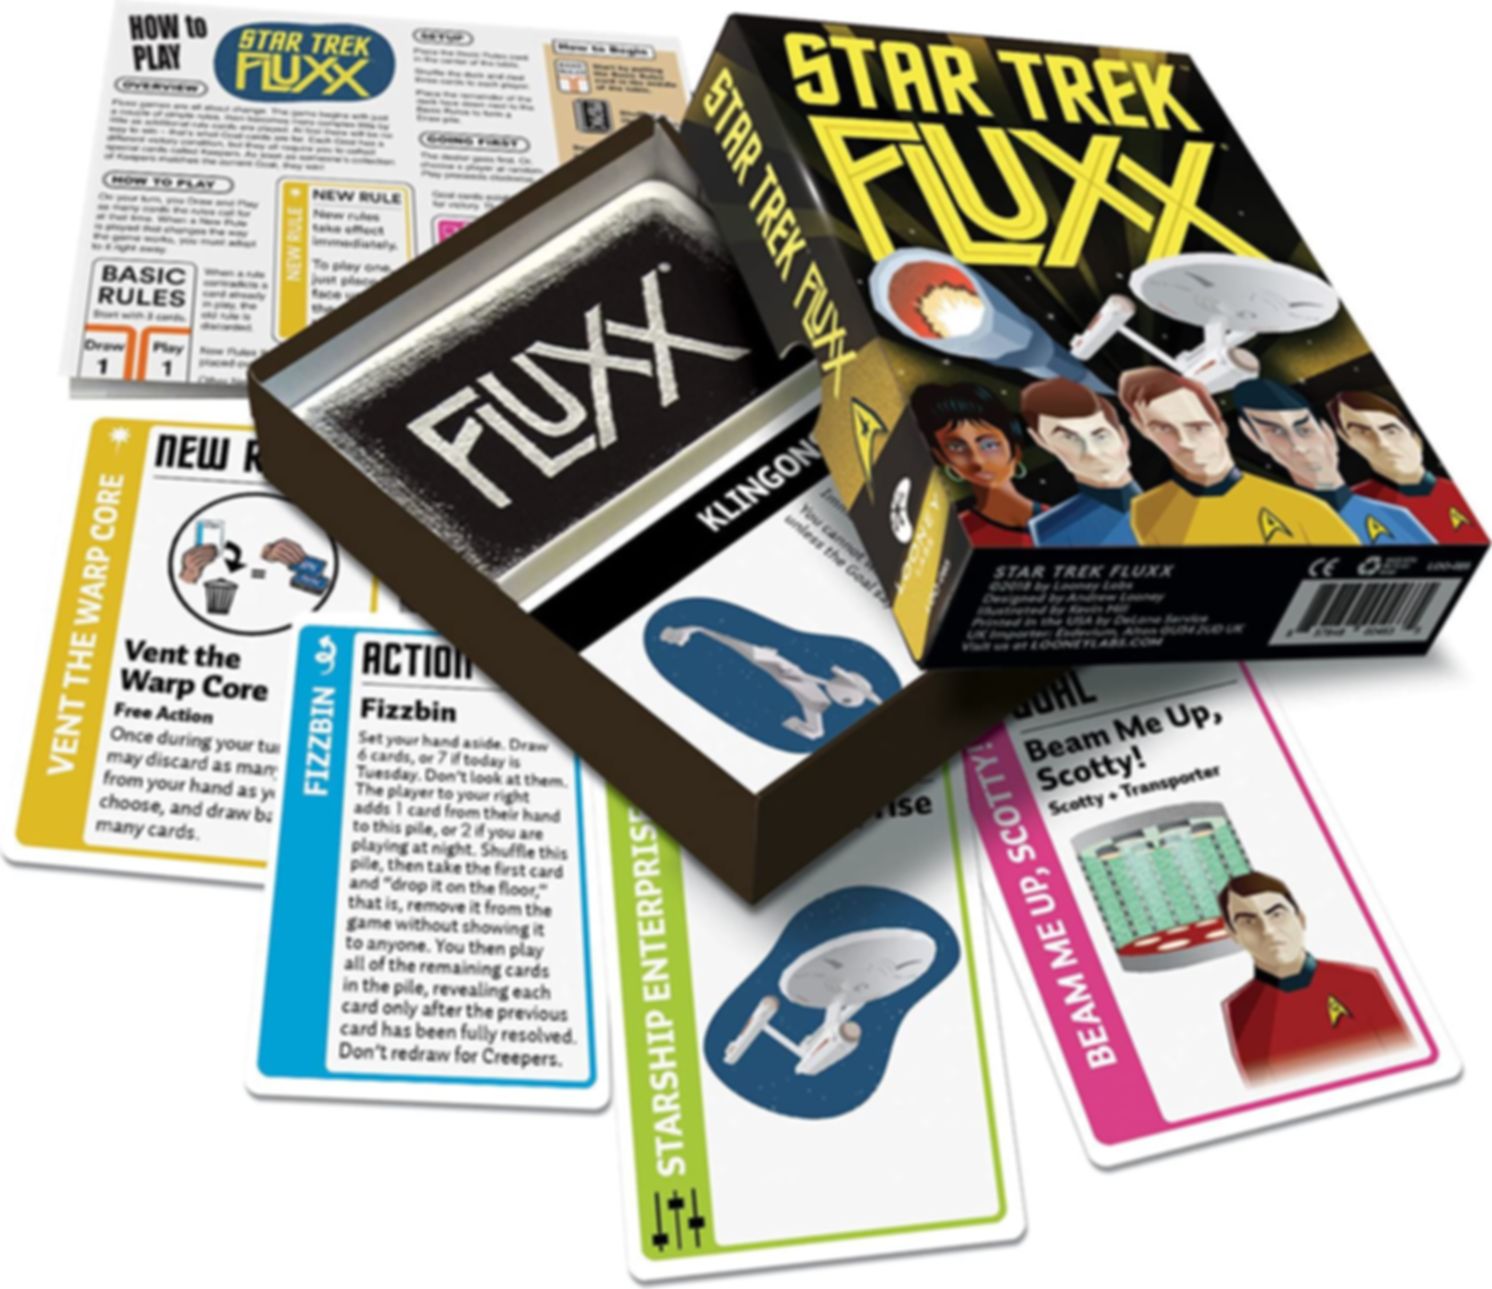 Star Trek Fluxx components